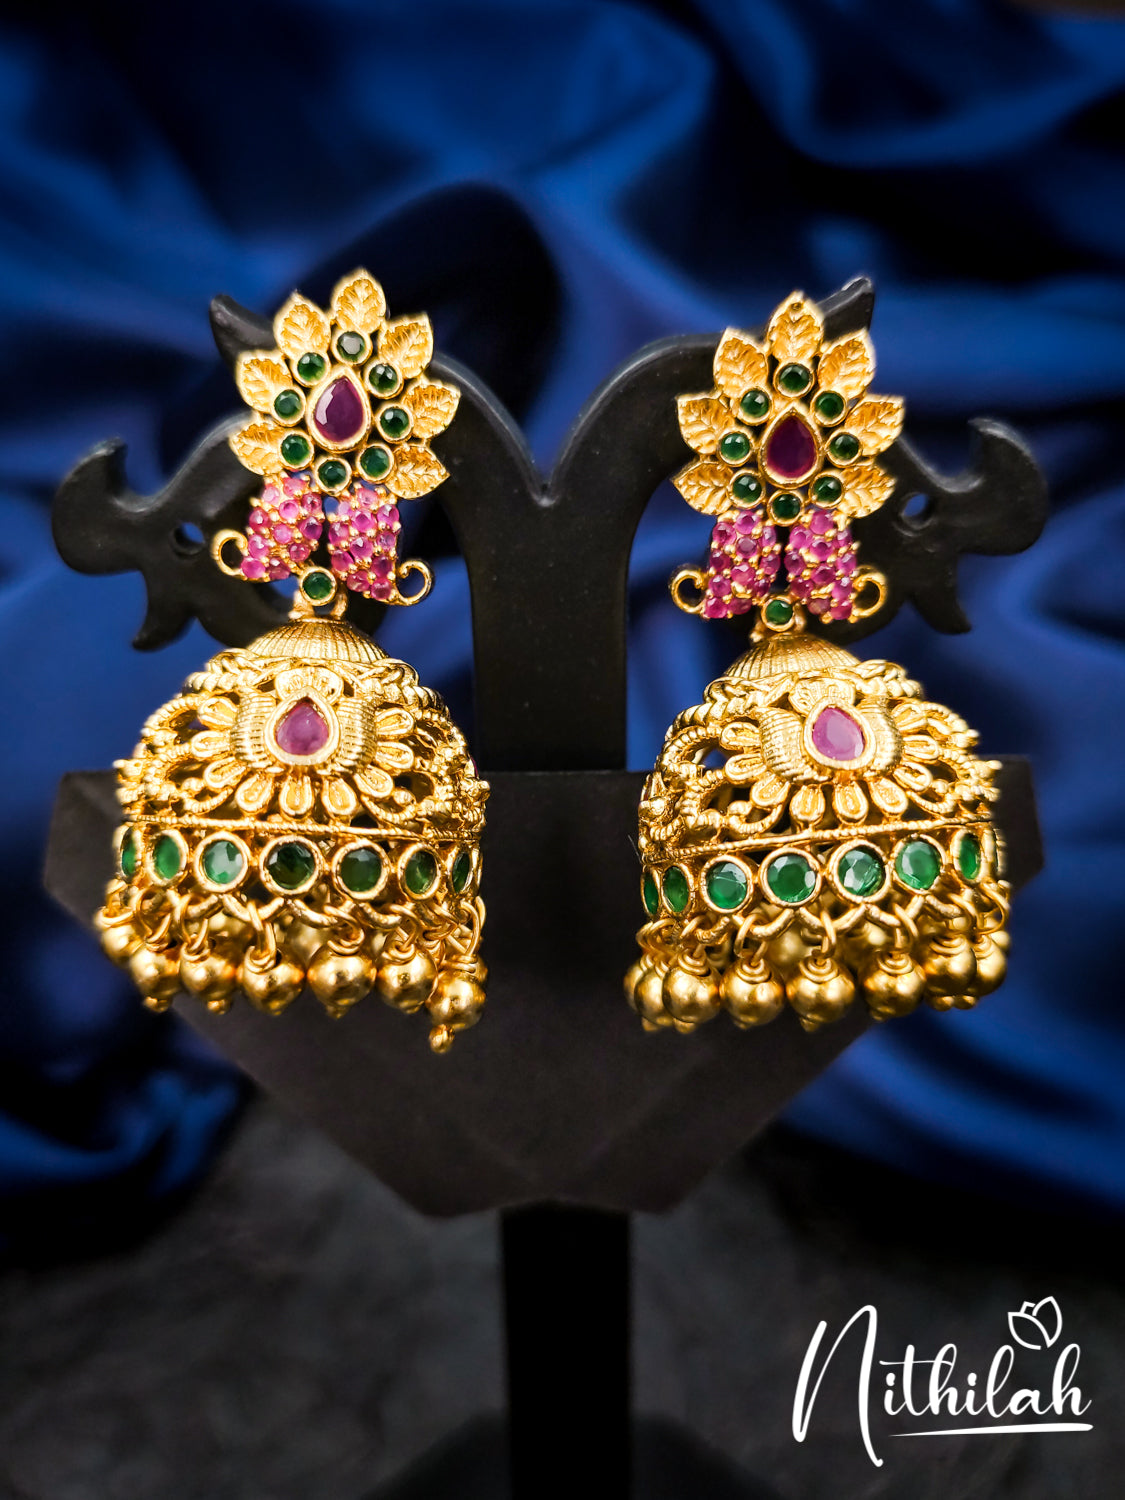 Nithilah Pretty stone jhumka earrings